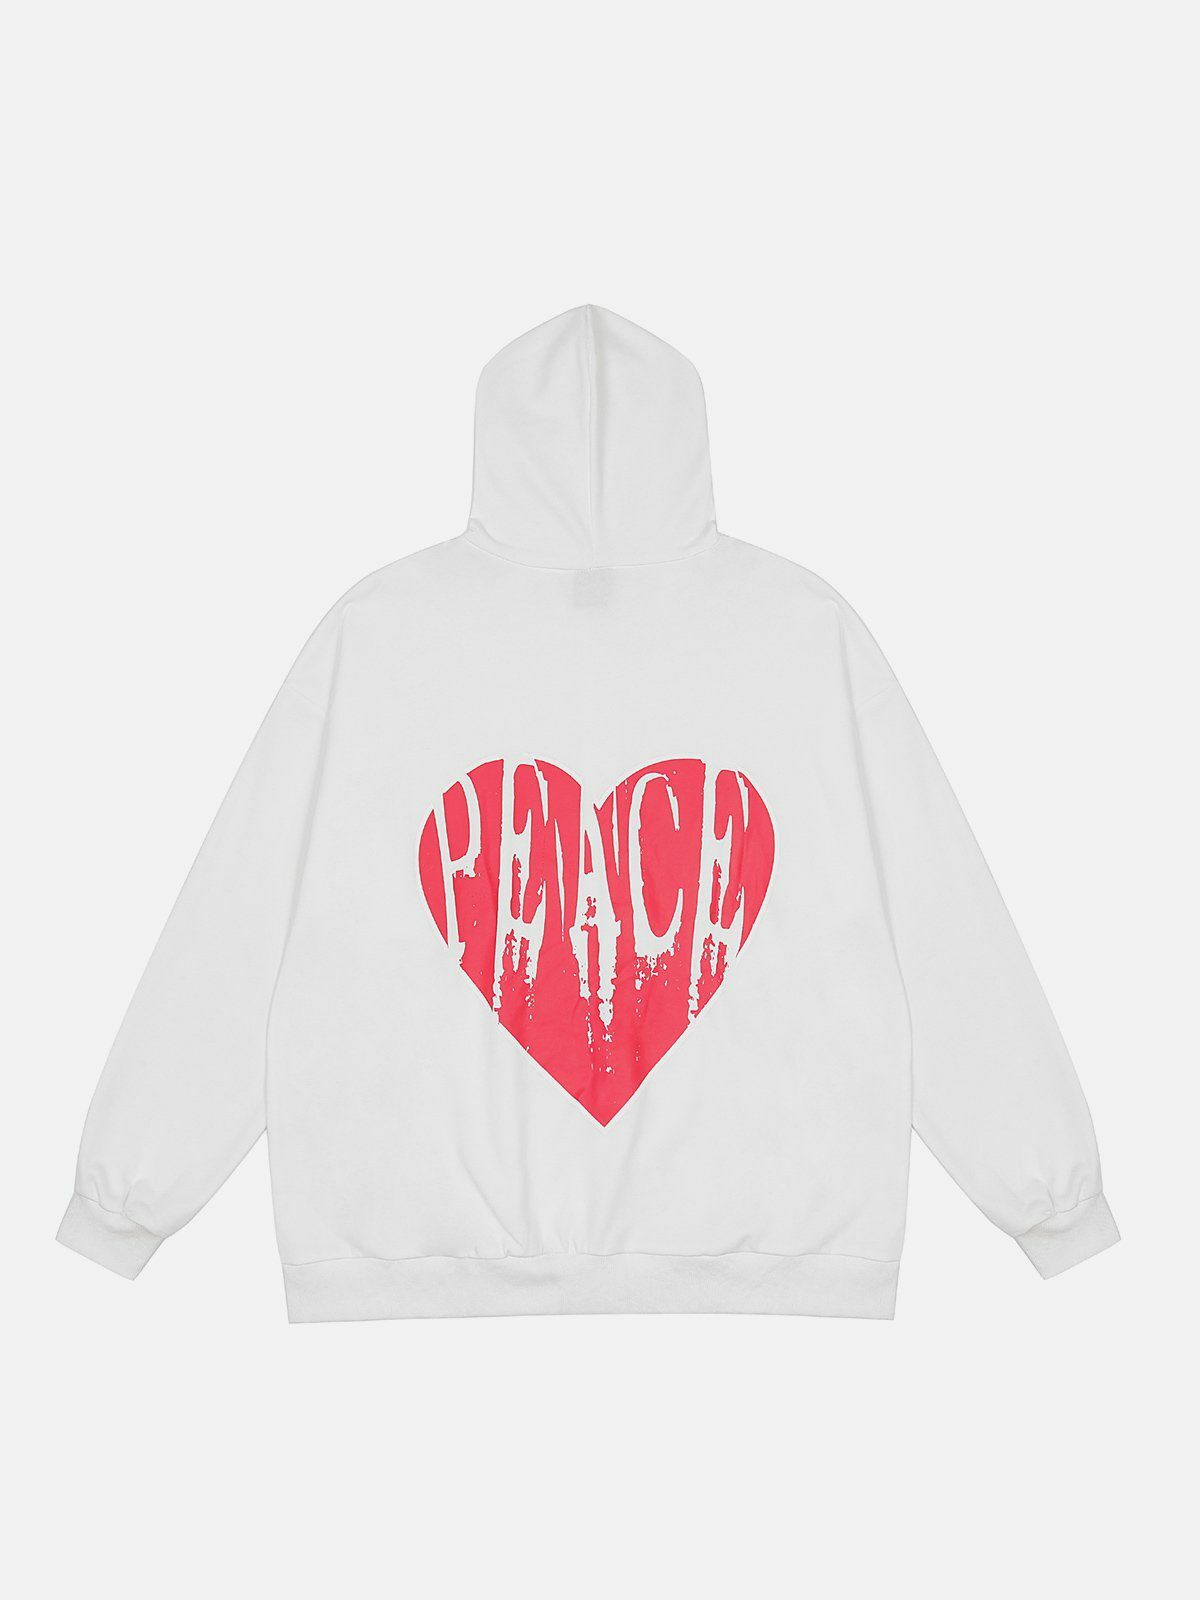 peace & love cardigan hoodie retro vibes & cozy style 8790